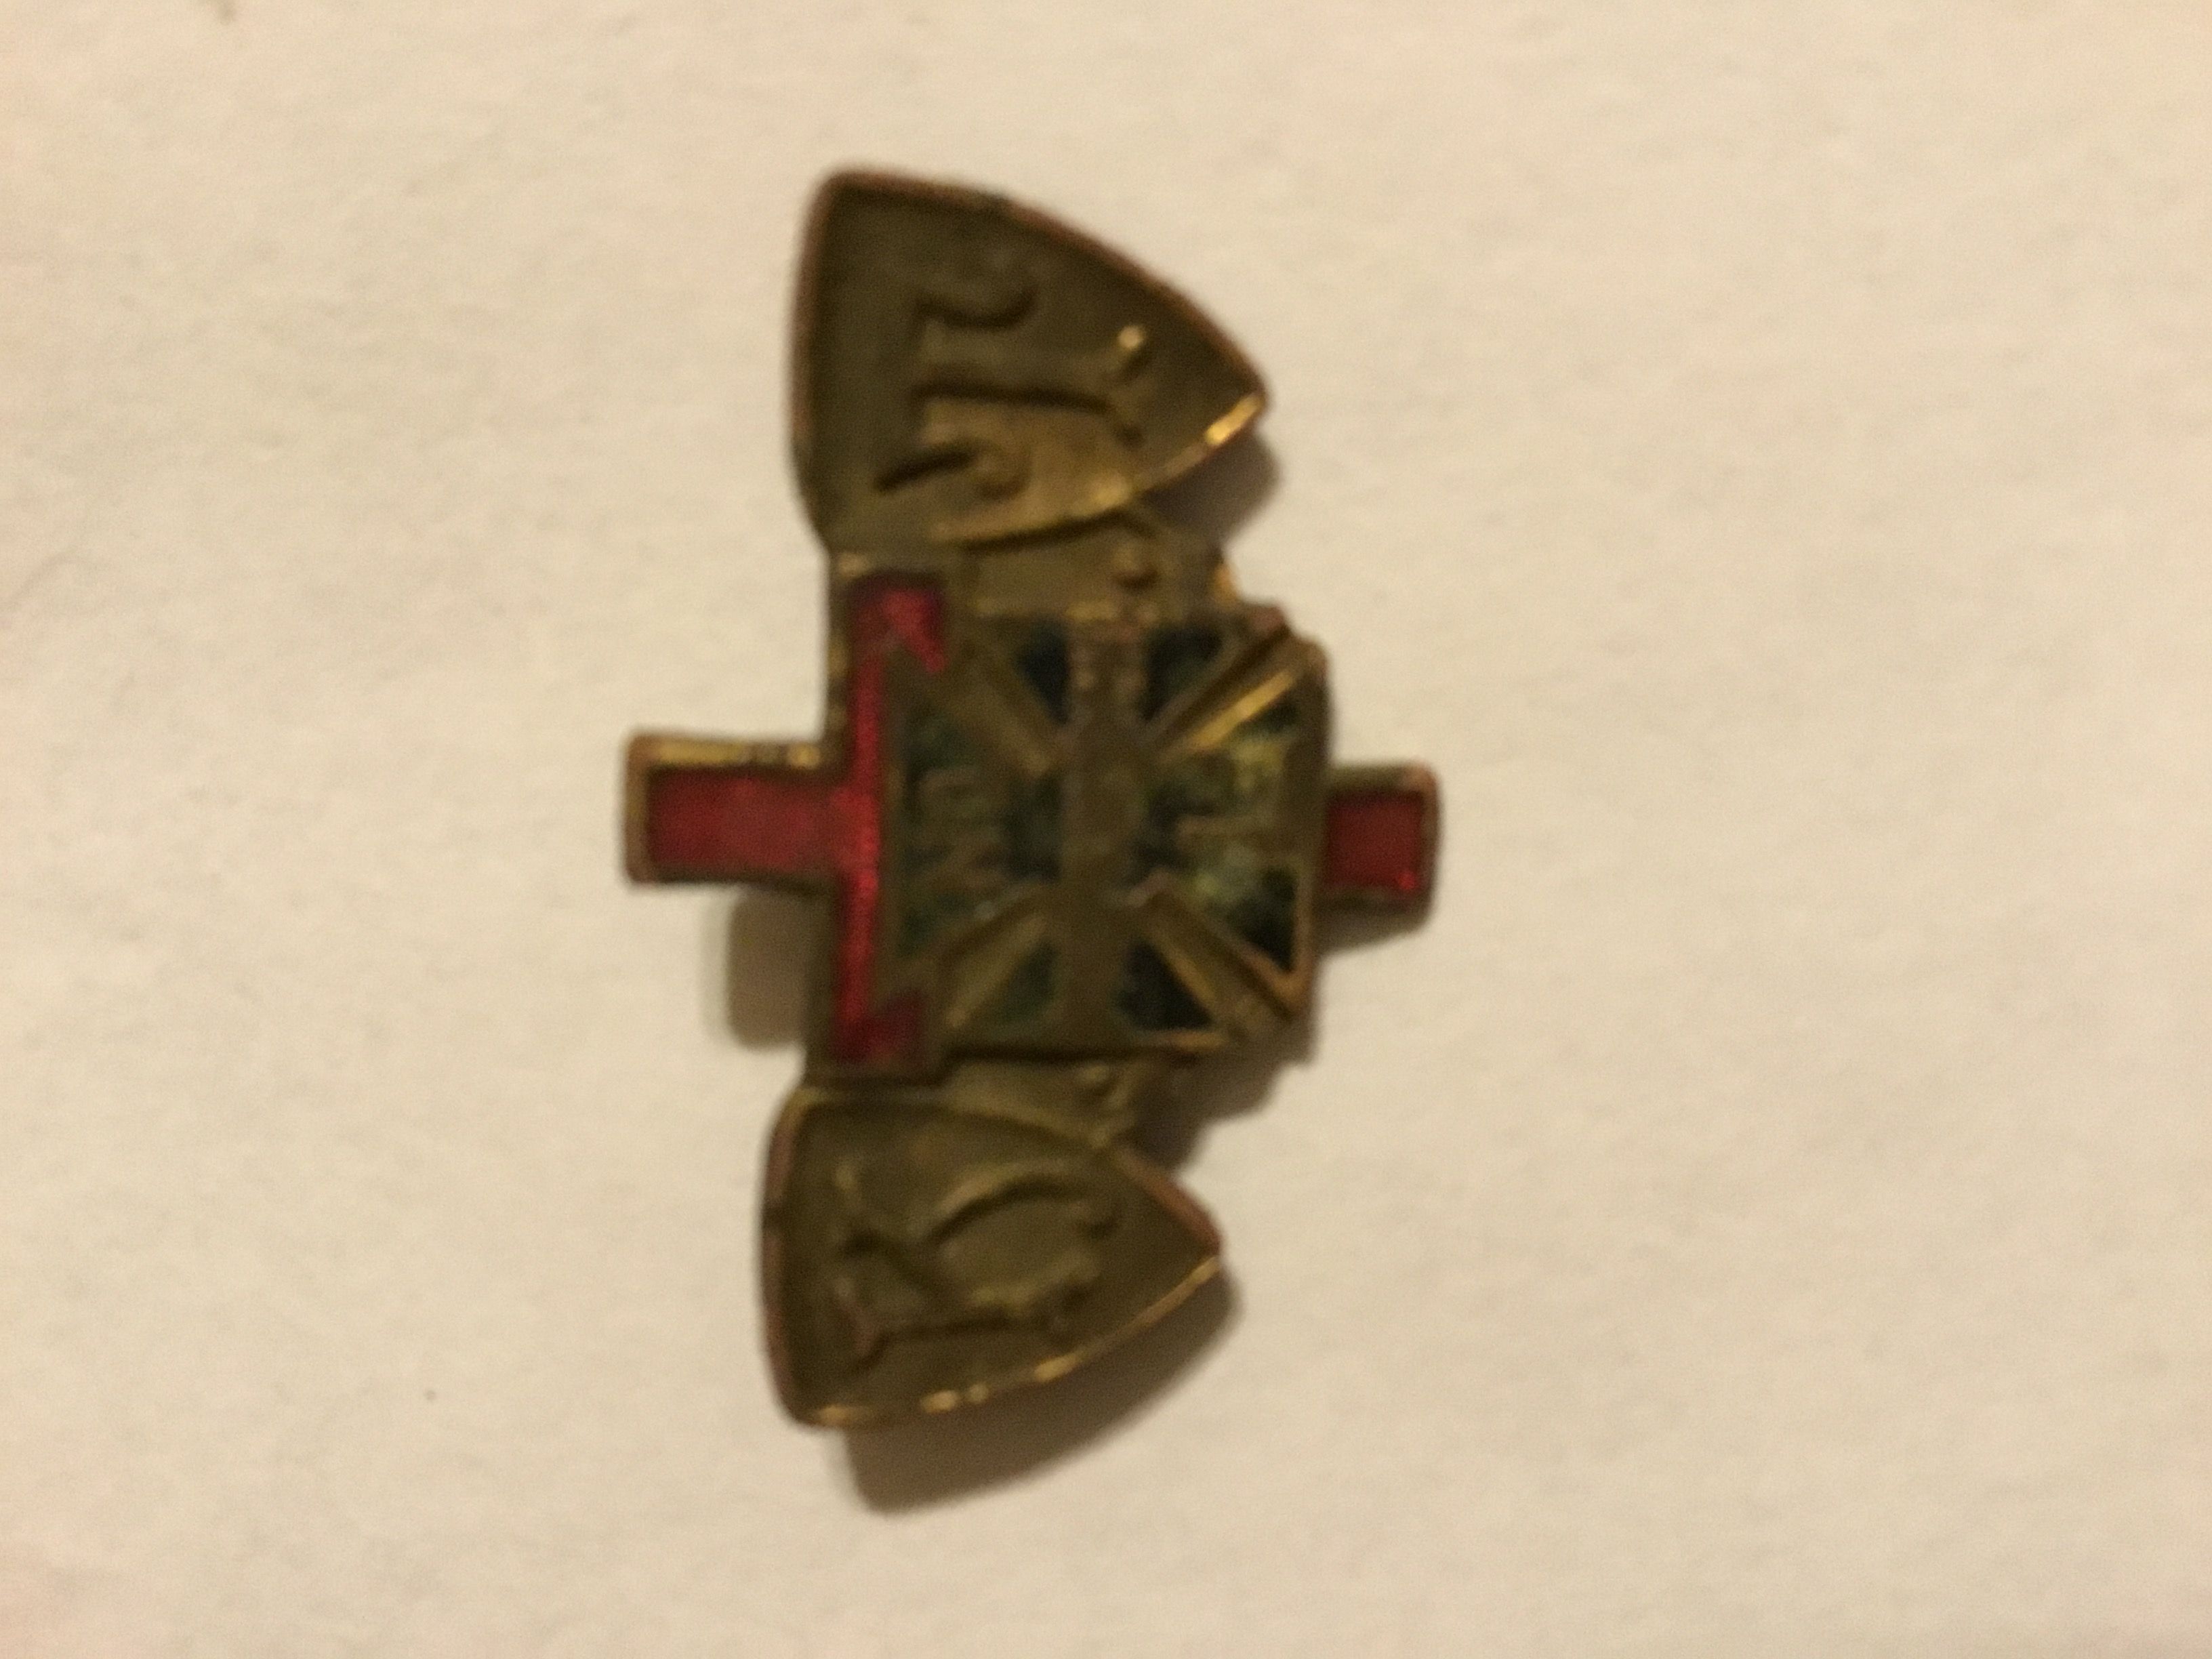 99635280 9775 455F 9111 20DB1CA6B1A1

Knights Templar pin original
Pittsburgh No. 1 on front